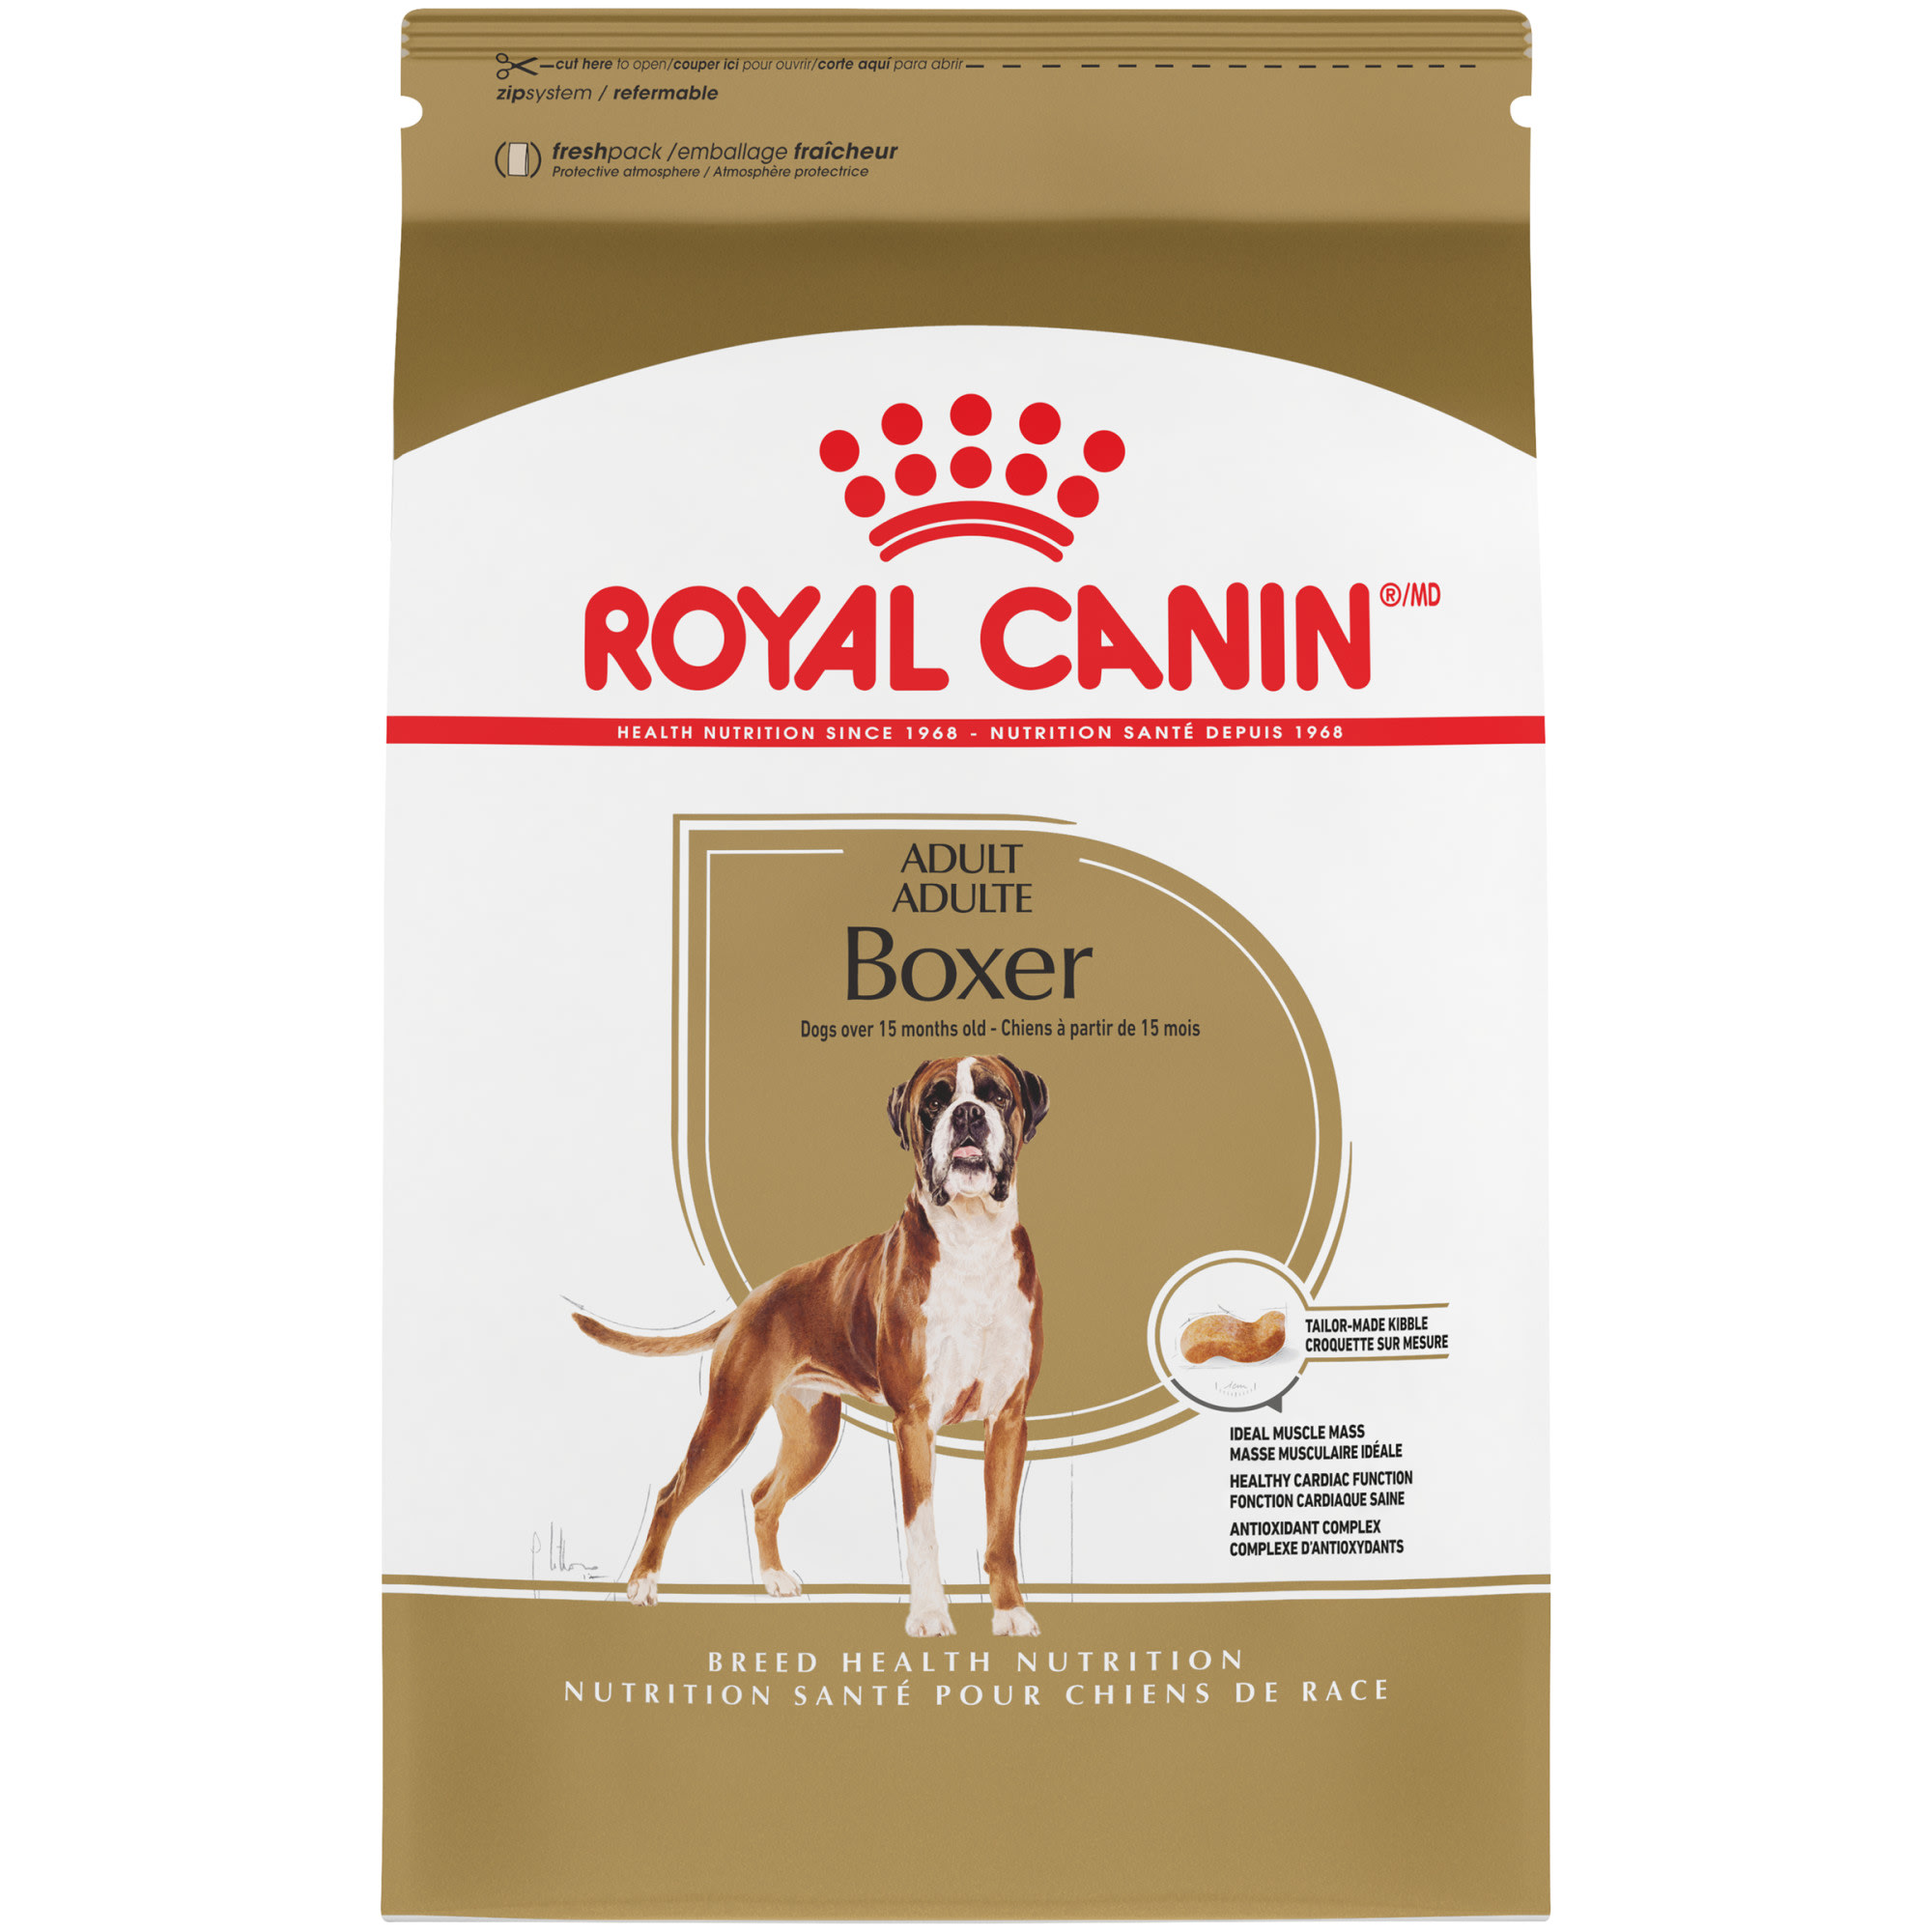 royal canin quality